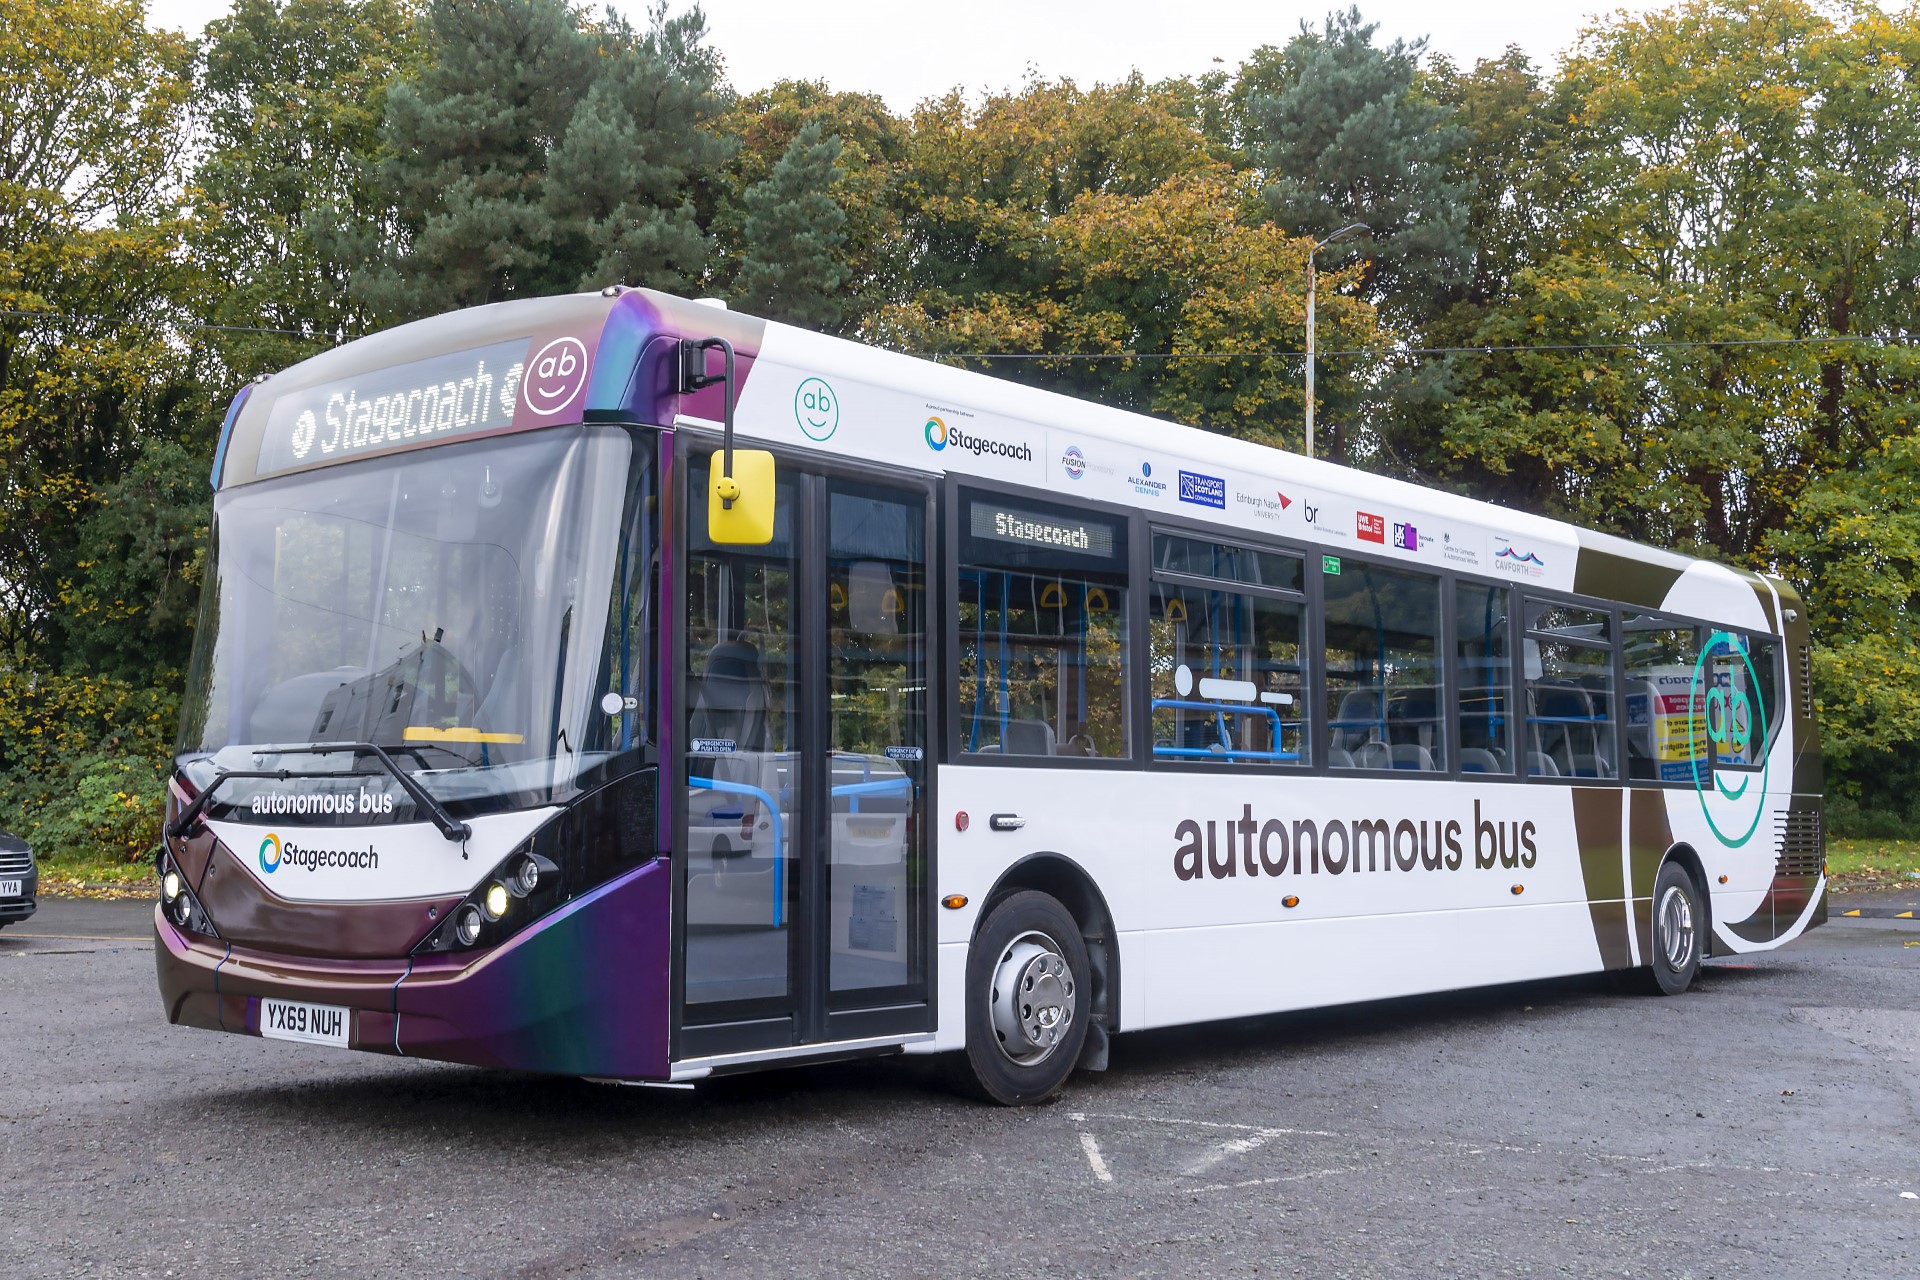 ADL autonomous bus livery revealed